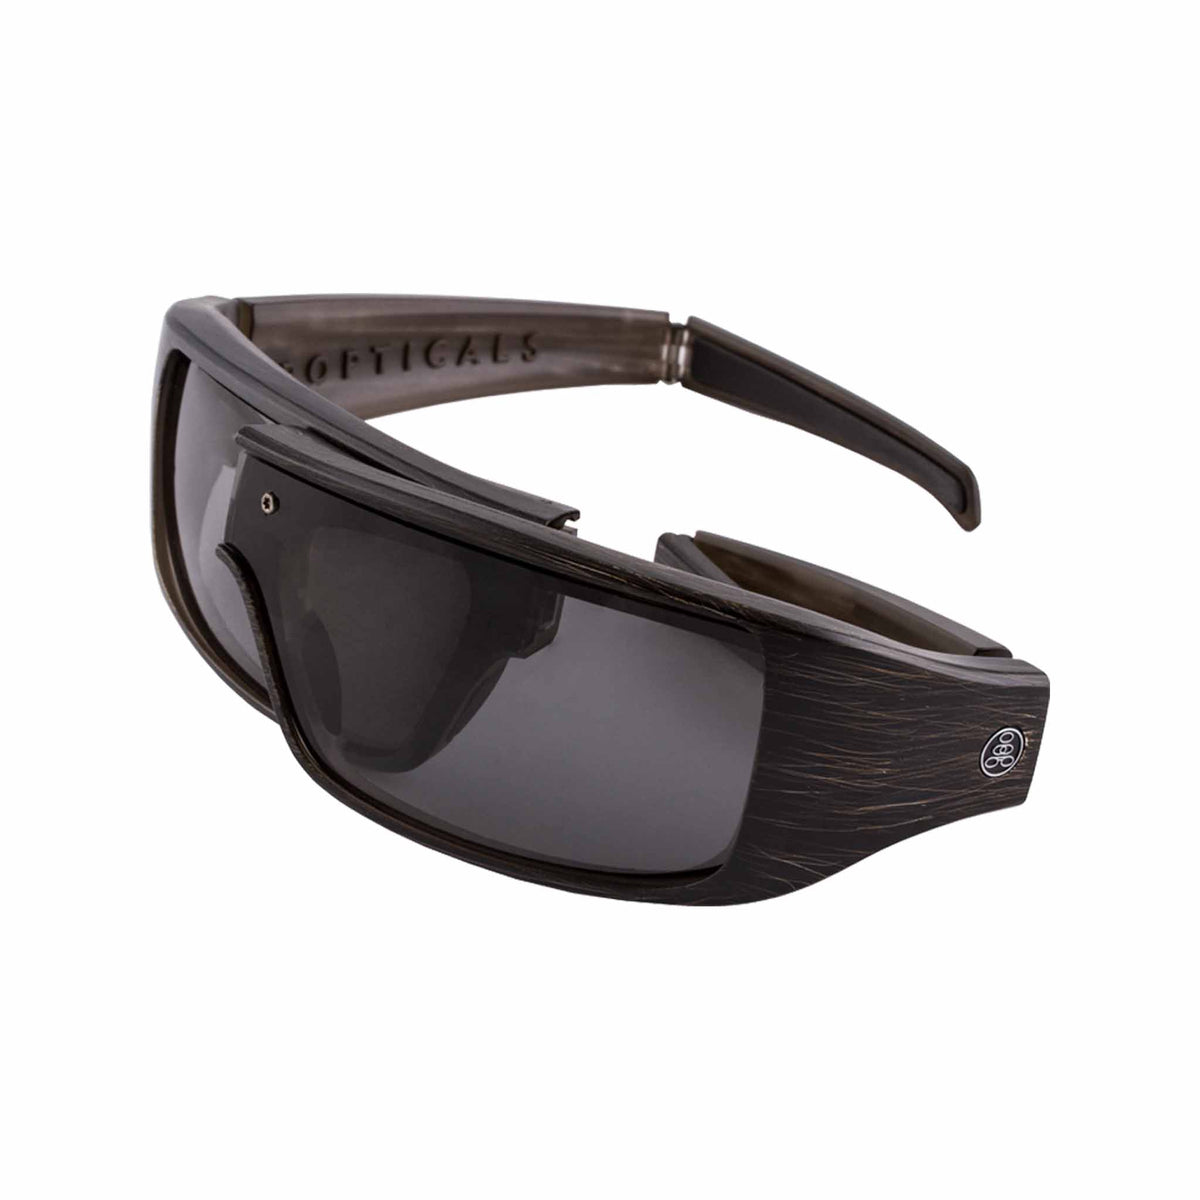 Popticals, Premium Compact Sunglasses, PopGear, 090050-ZUGP, Polarized Sunglasses, Matte Brush Black Frame , Gray Lenses, Spider View